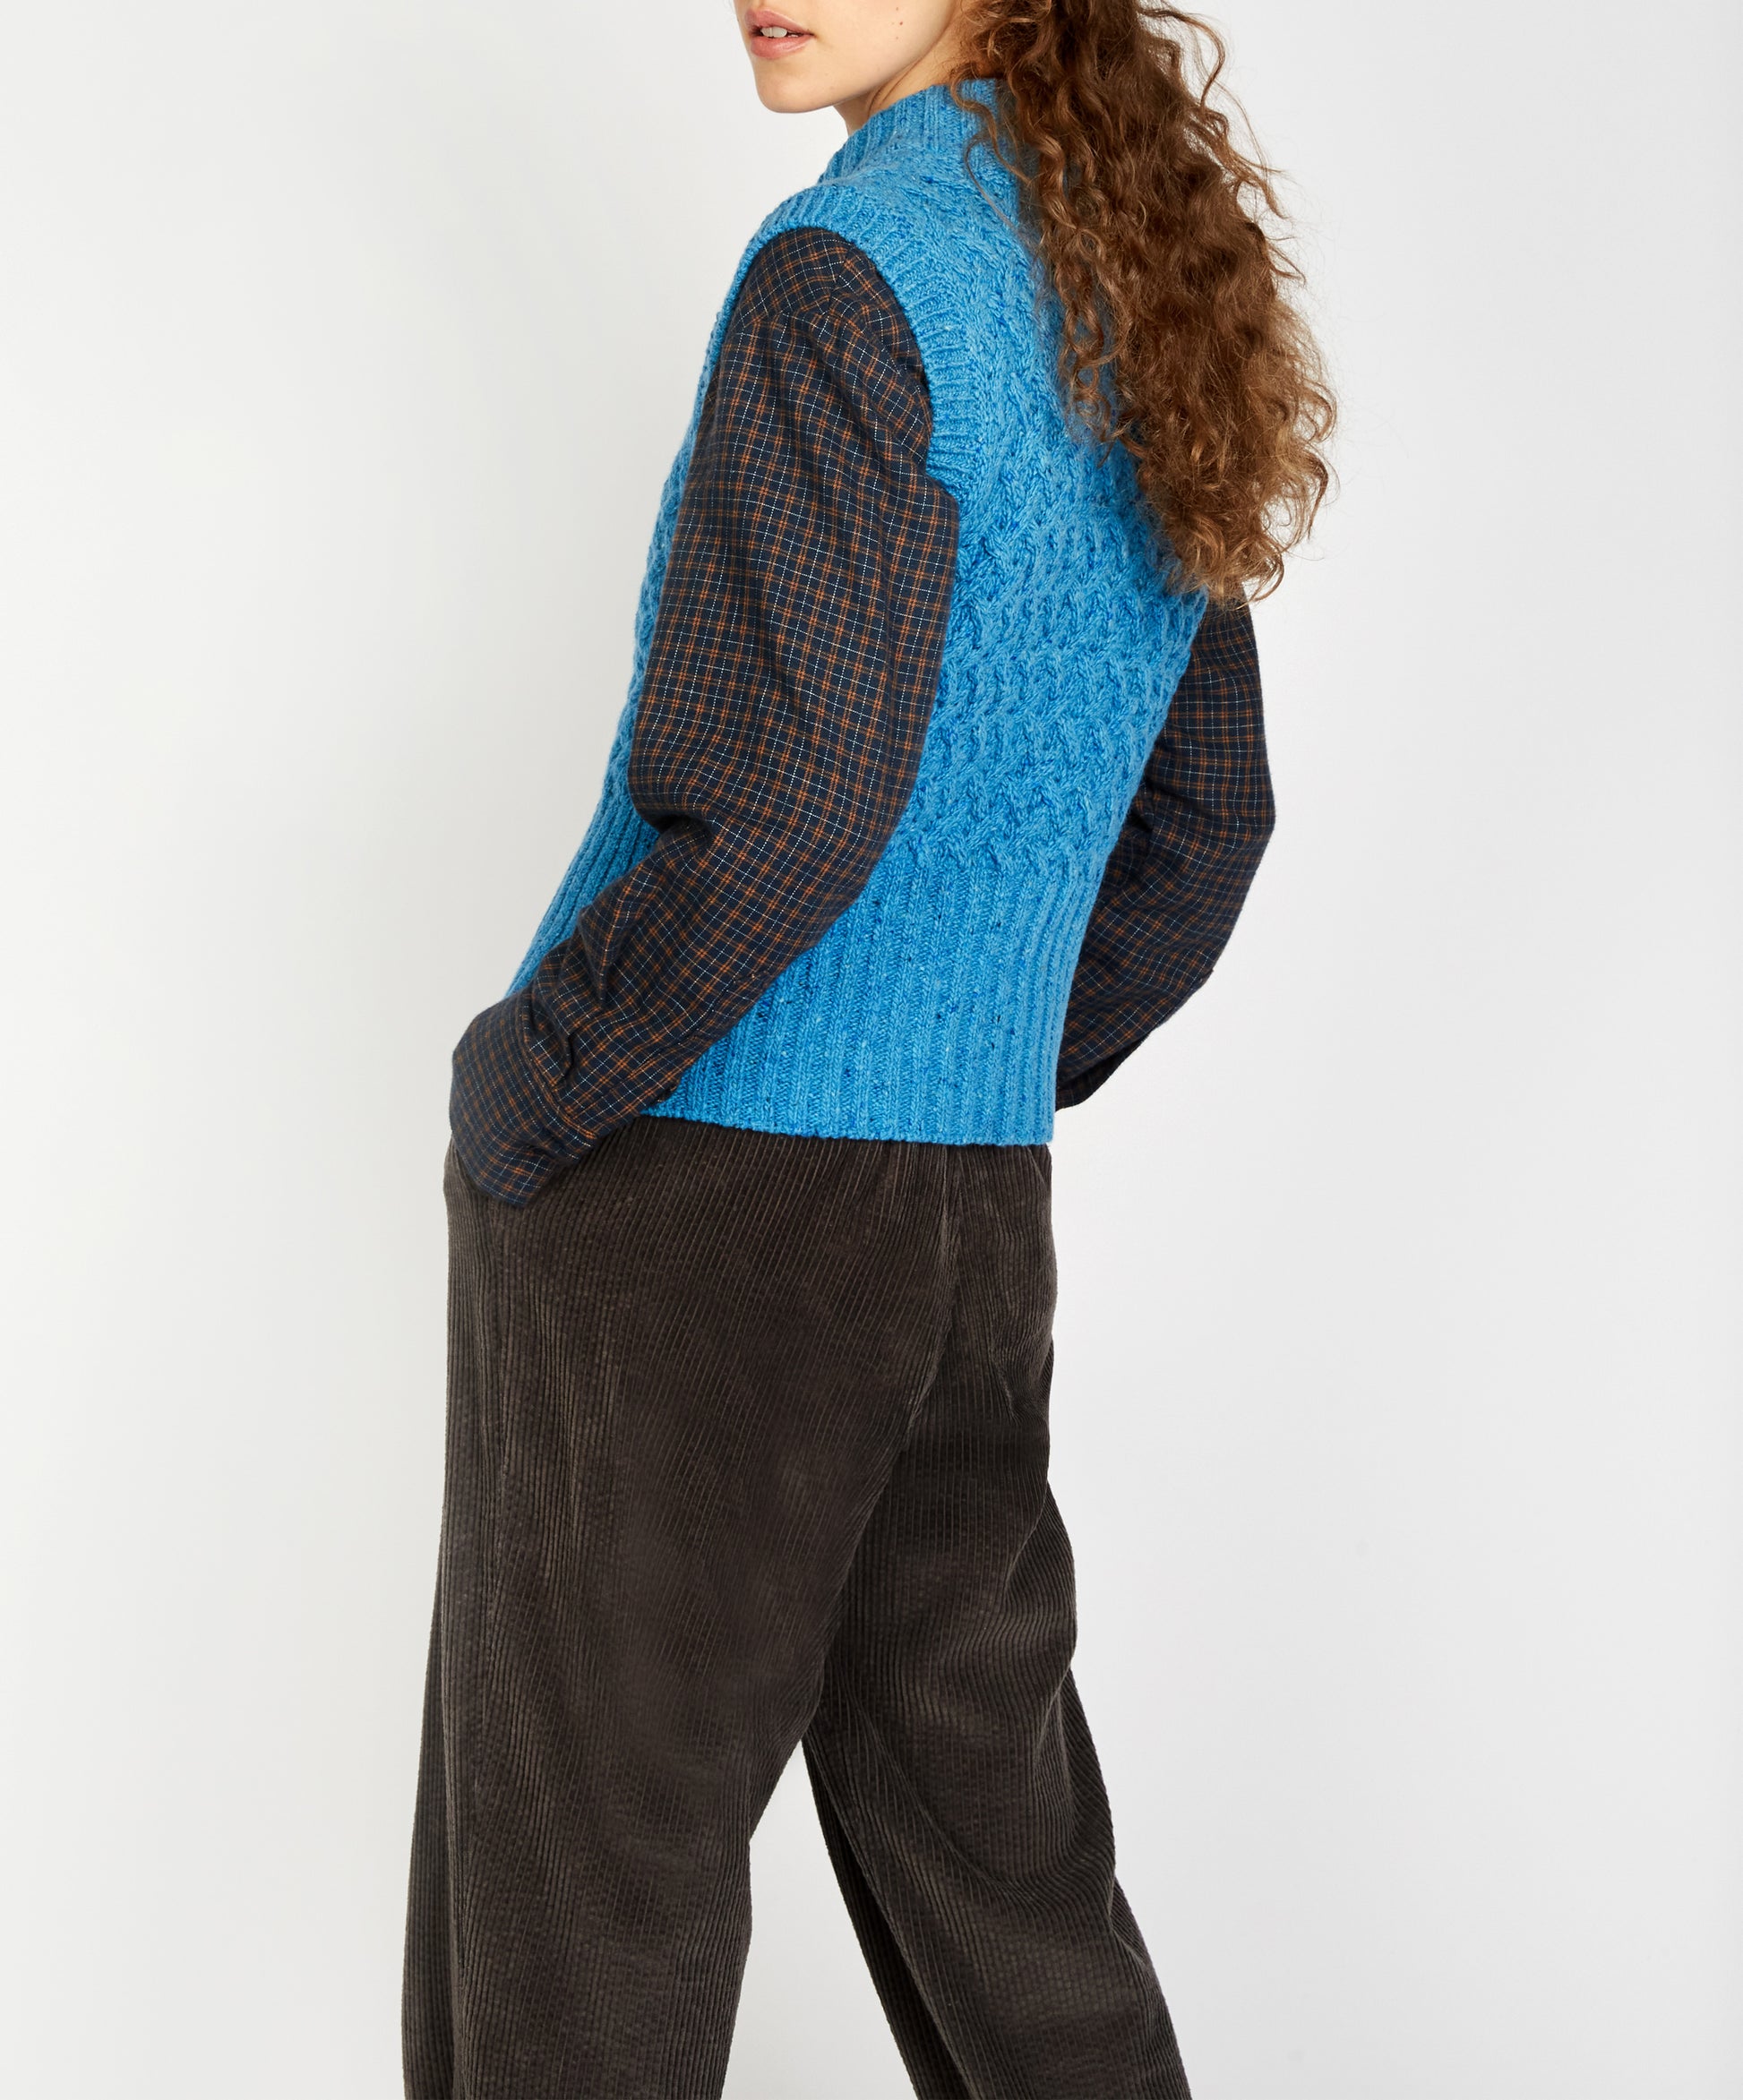 IrelandsEye Knitwear Ballybricken Trellis Cropped Vest Forget-Me-Not Blue